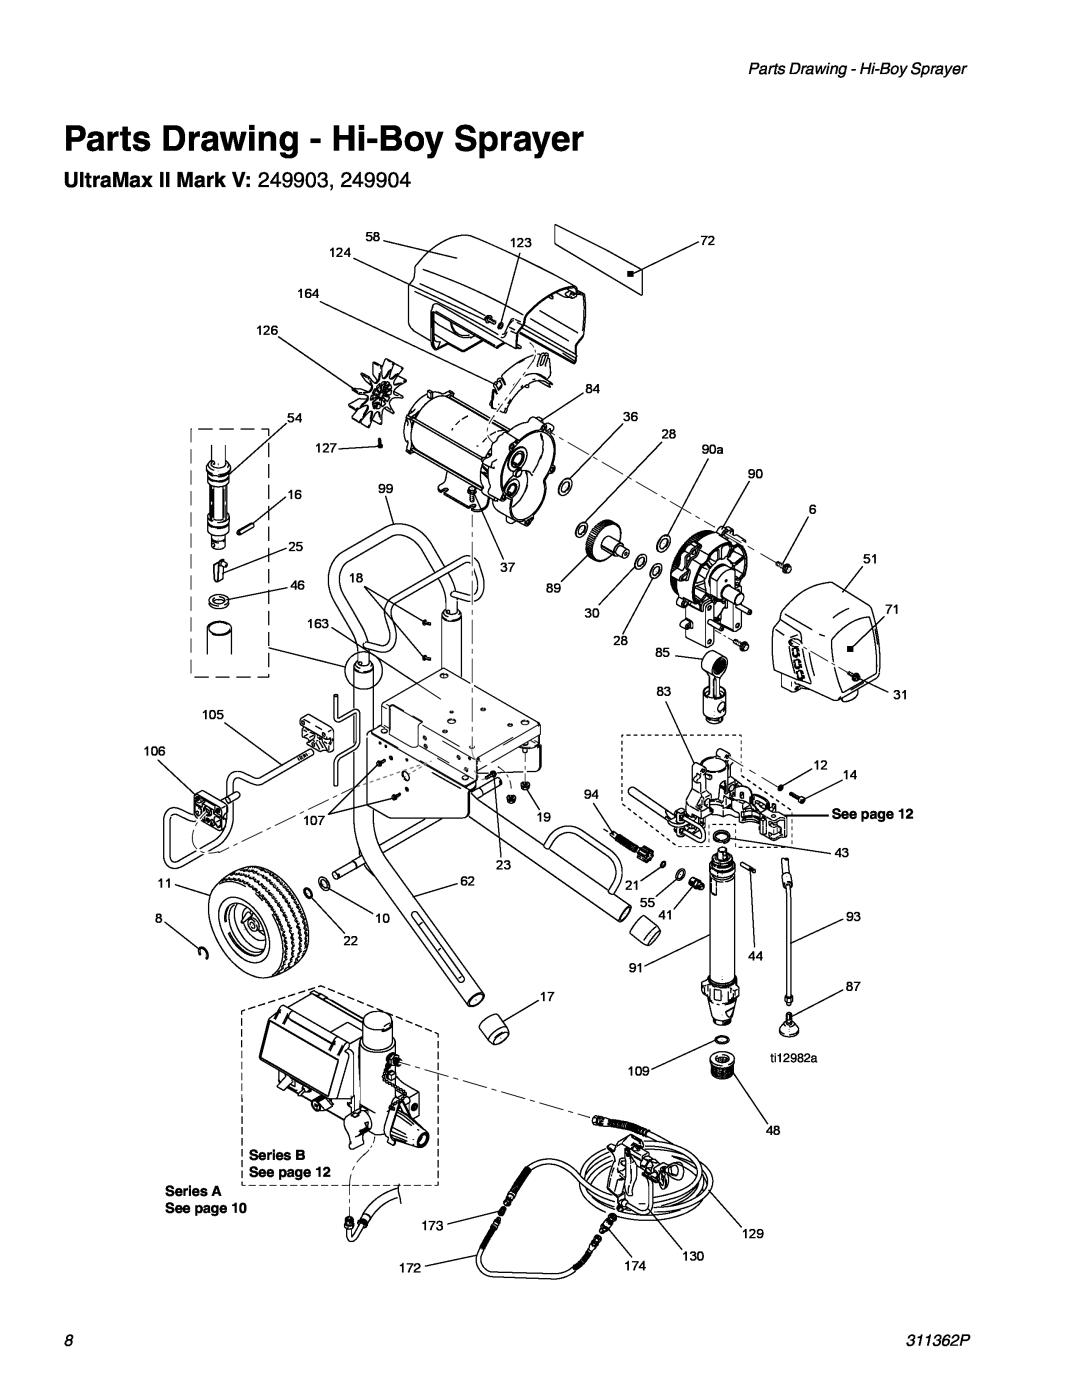 Graco Inc 1095, 1595 manual UltraMax II Mark V 249903, Parts Drawing - Hi-Boy Sprayer, Series B See page Series A See page 